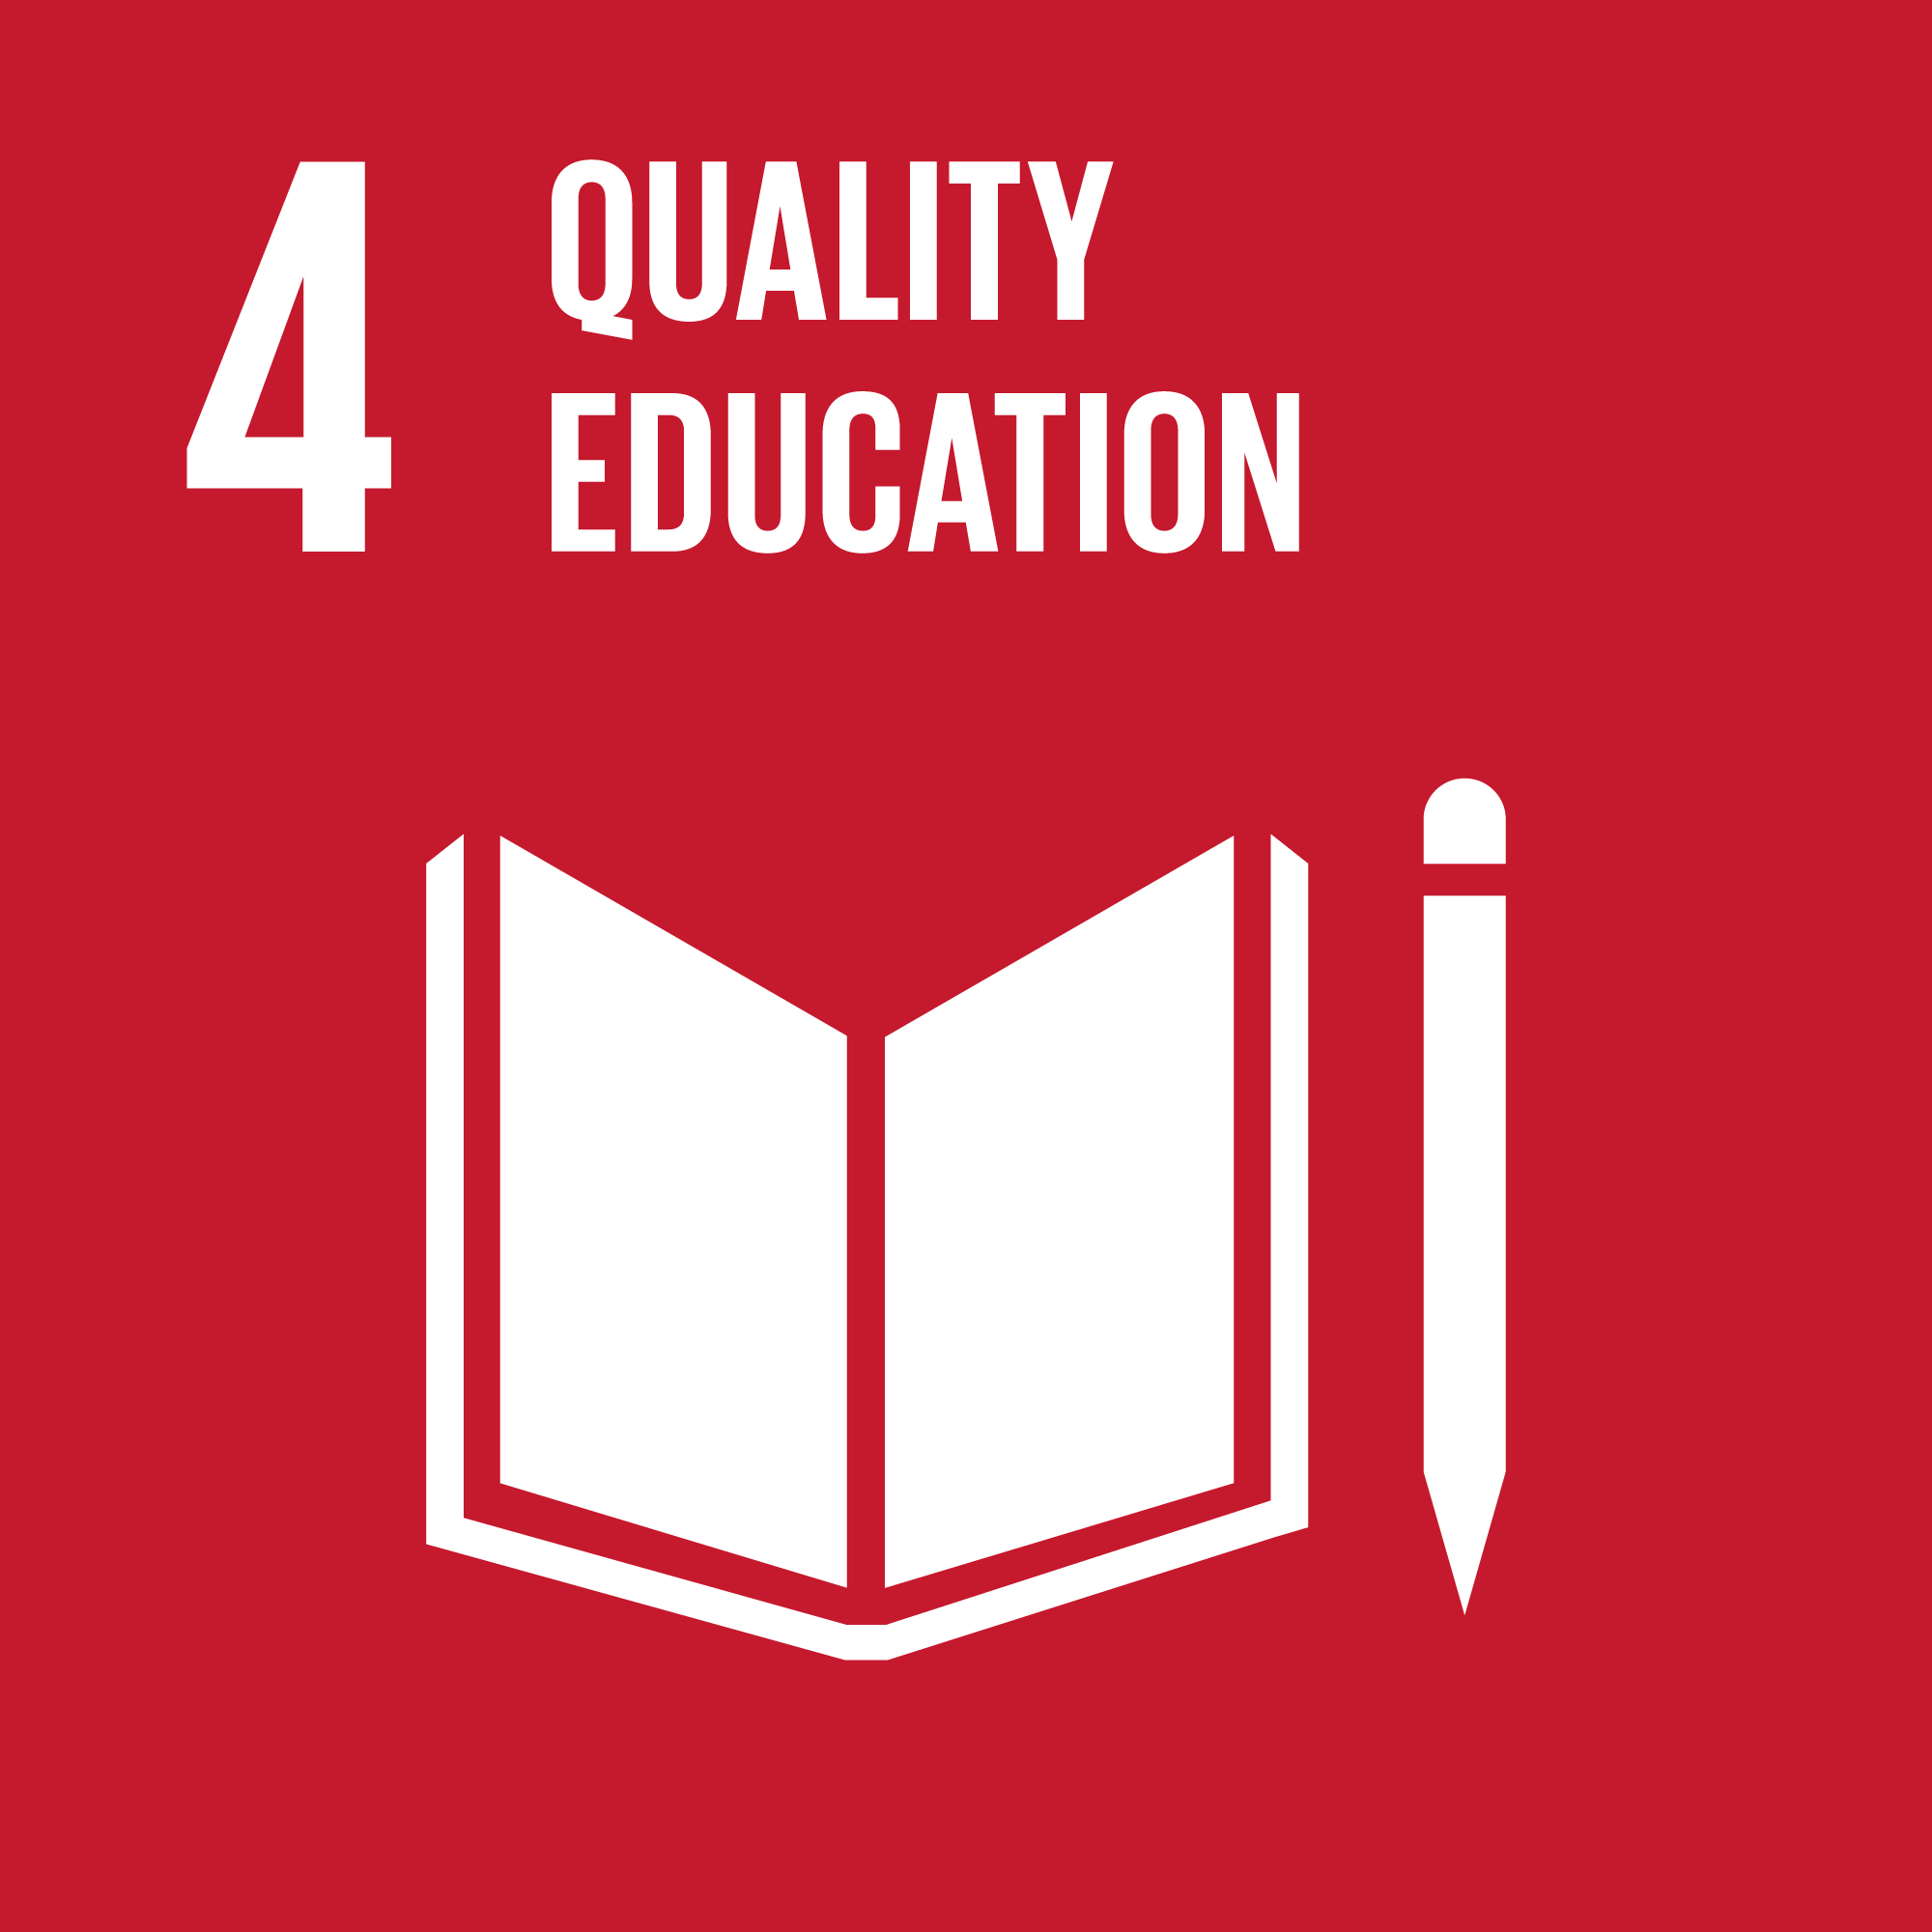 SDG 4 : QUALITY EDUCATION